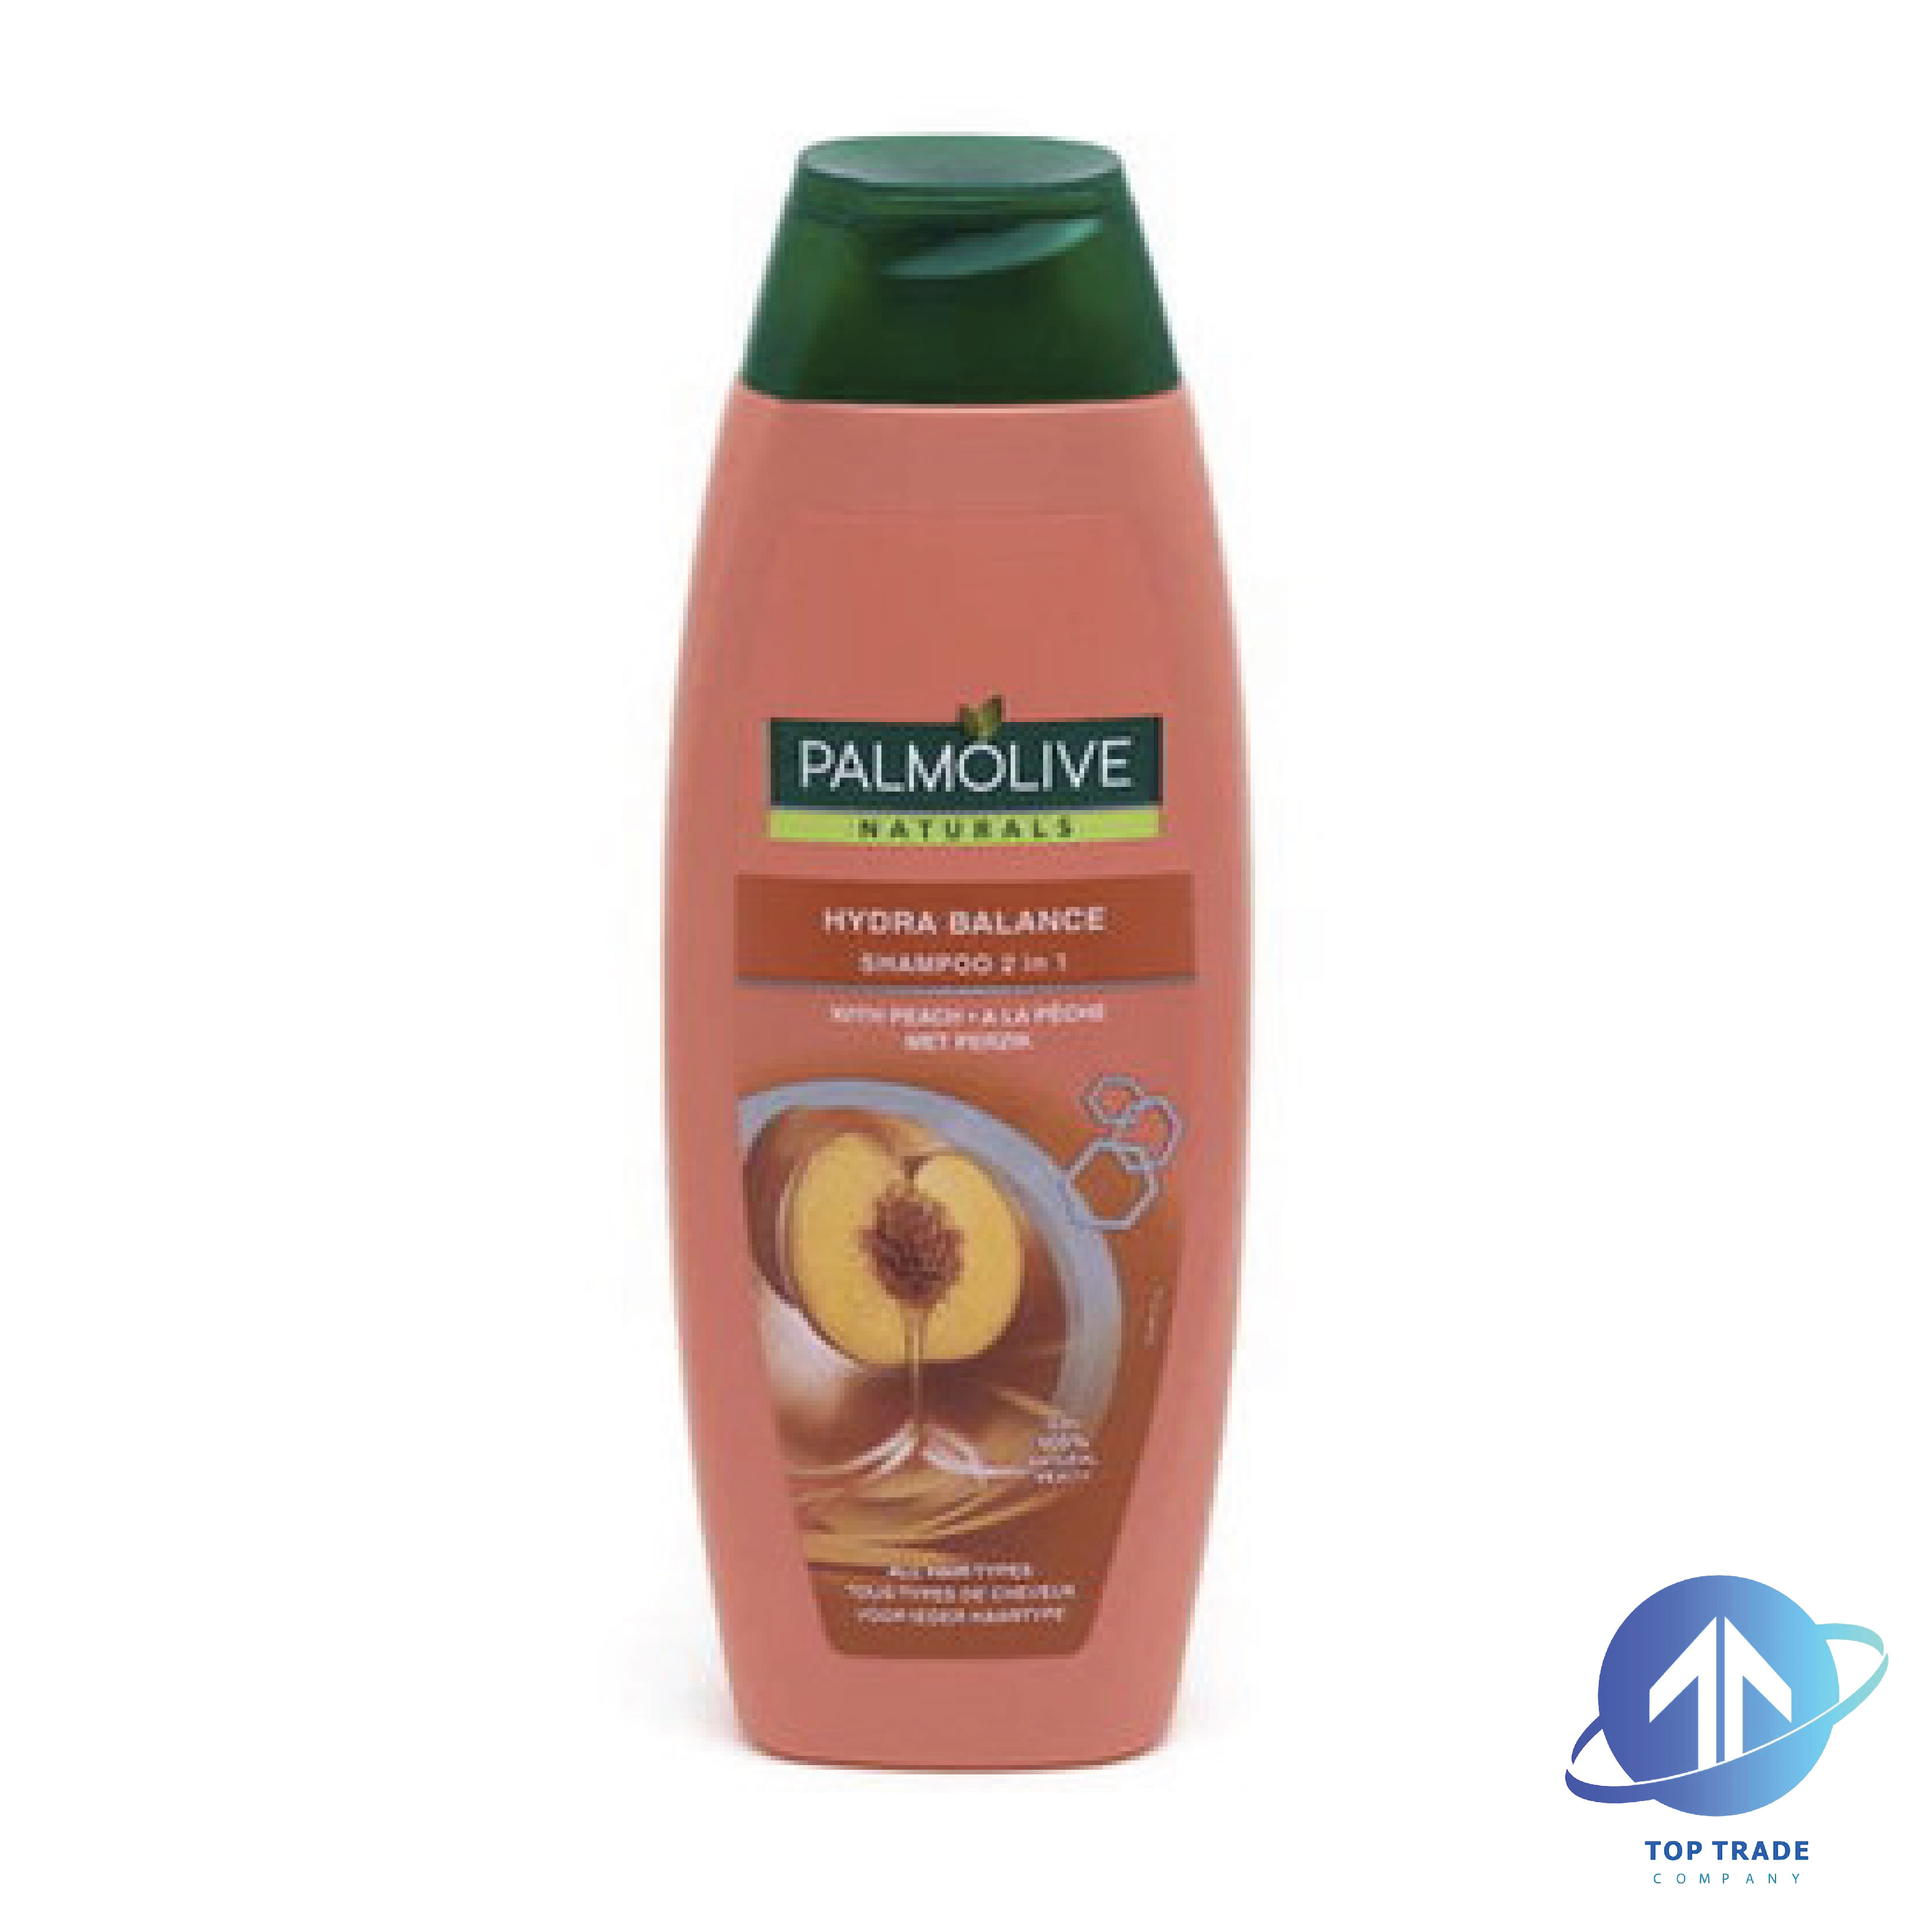 Palmolive shampoo 2in1 Hydro Balance peach 350ml